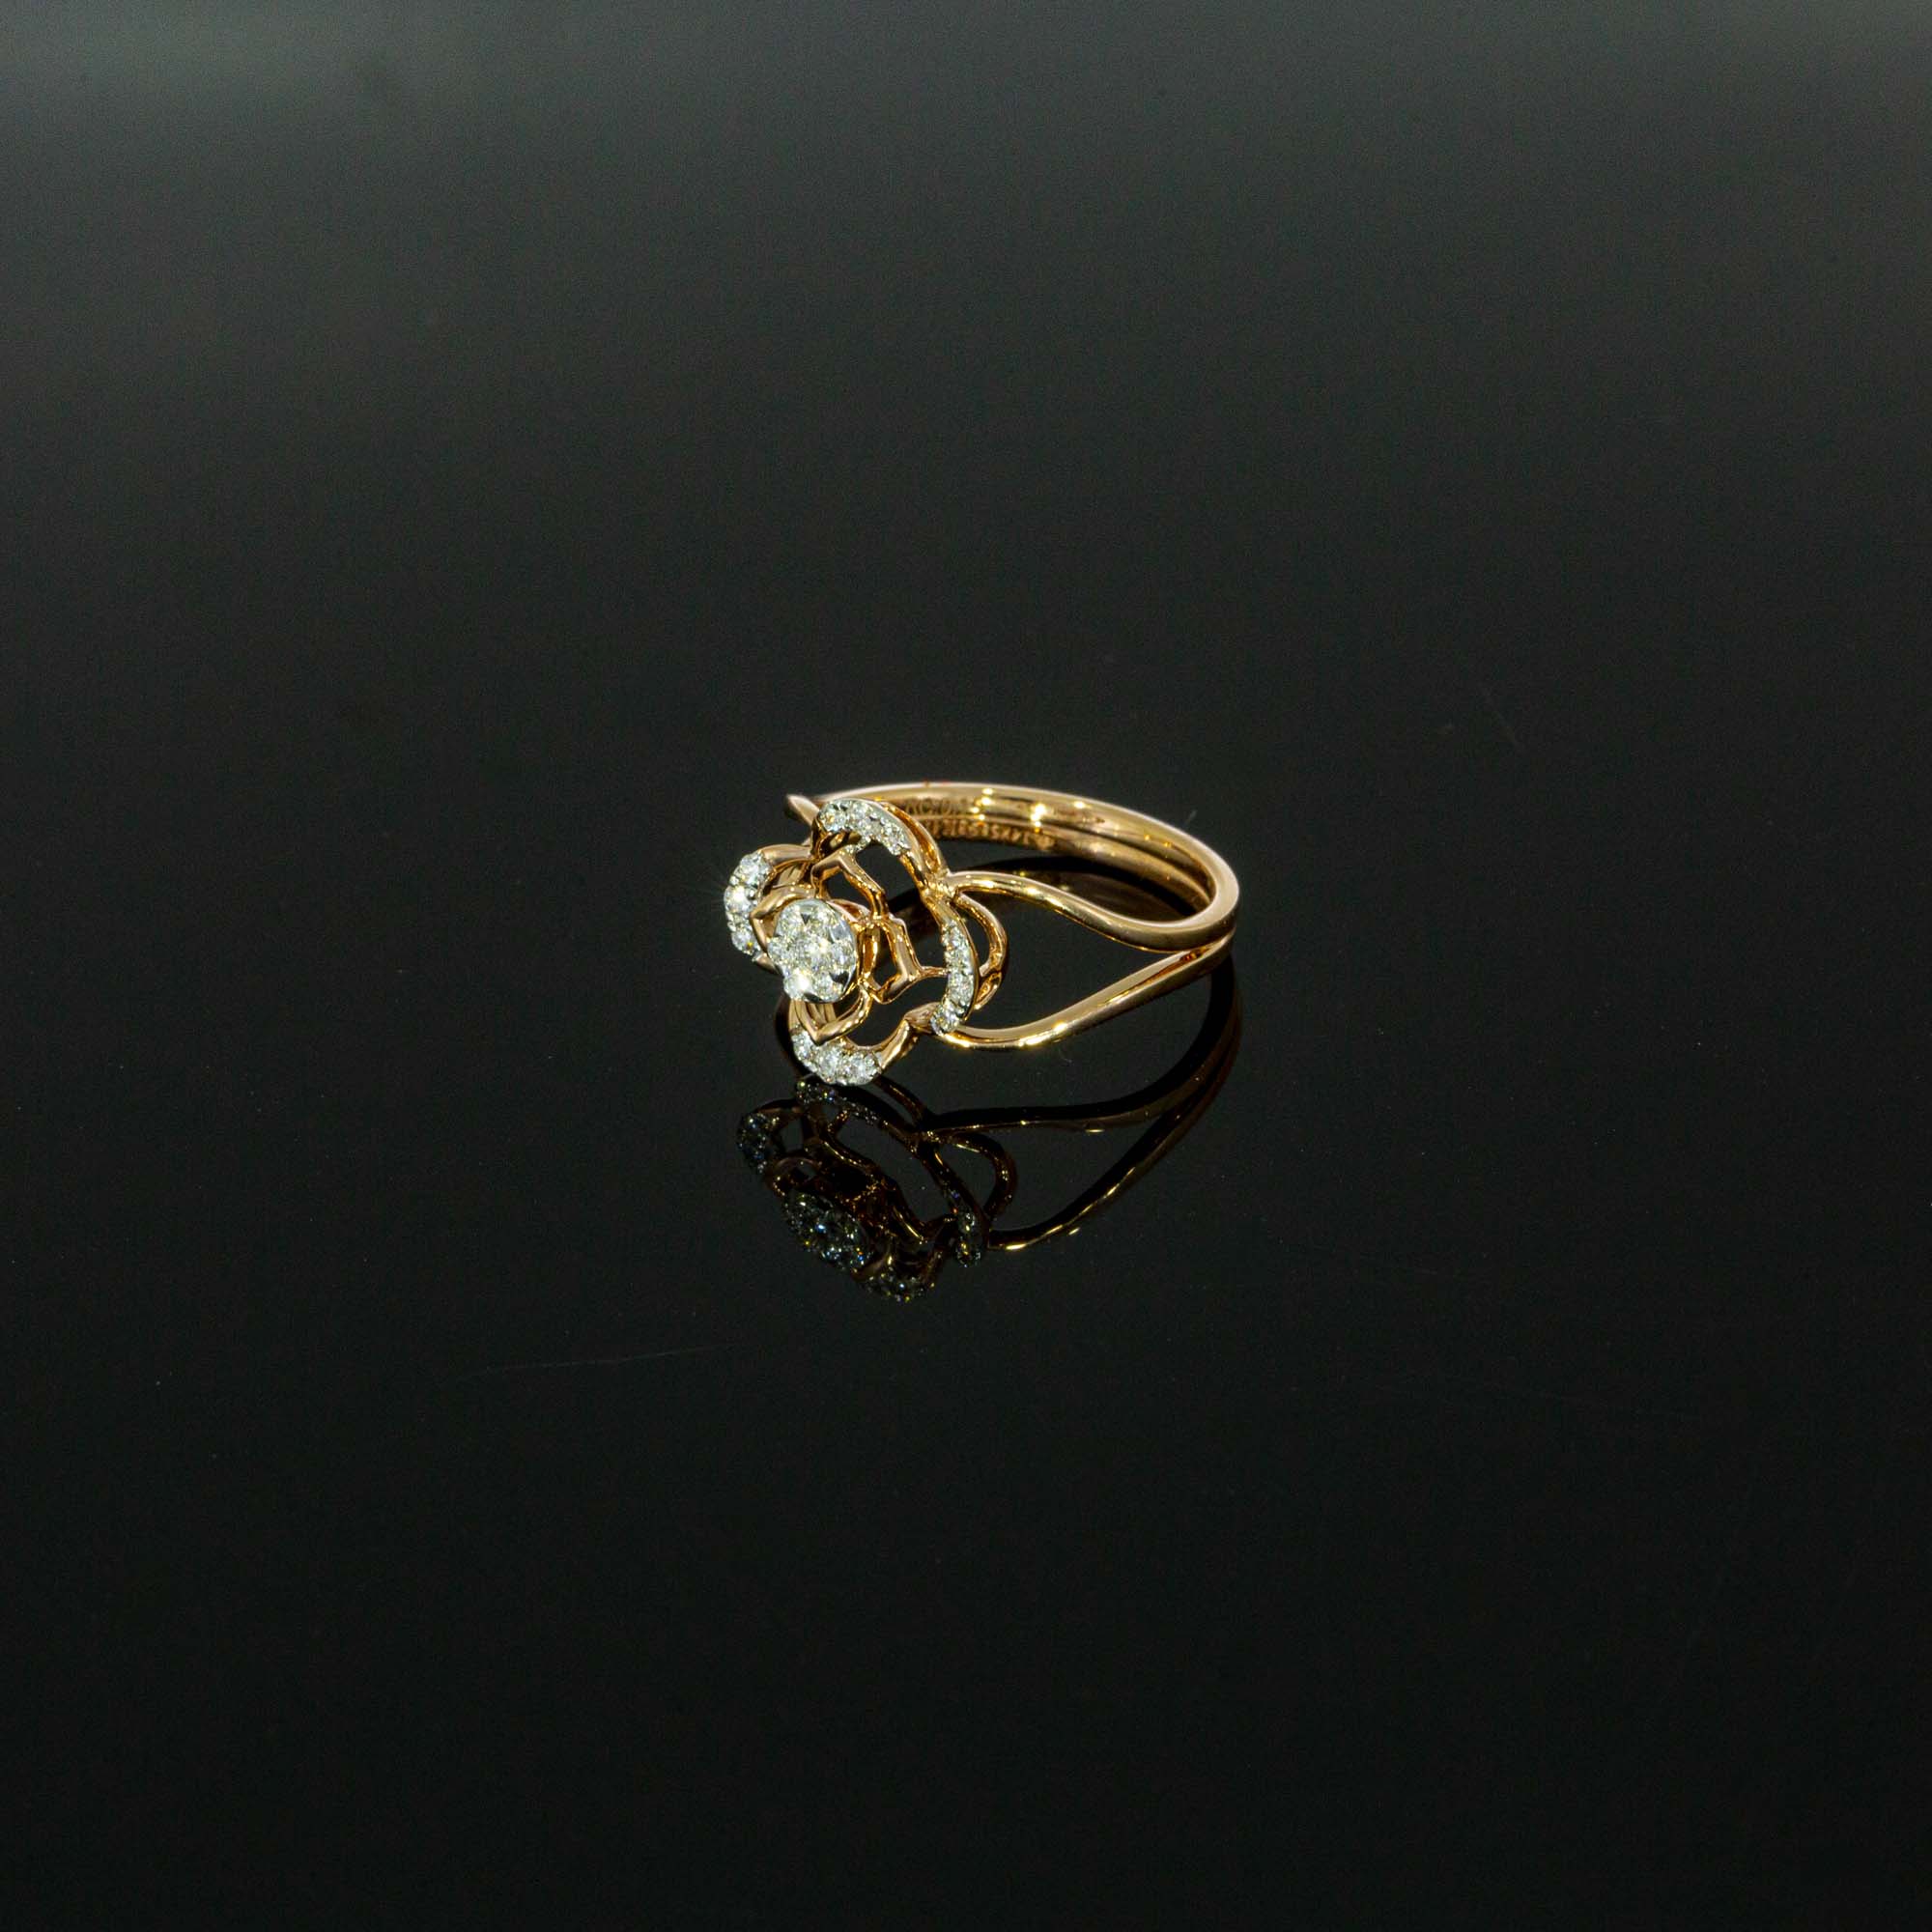 Luxurious Diamond Ring Design